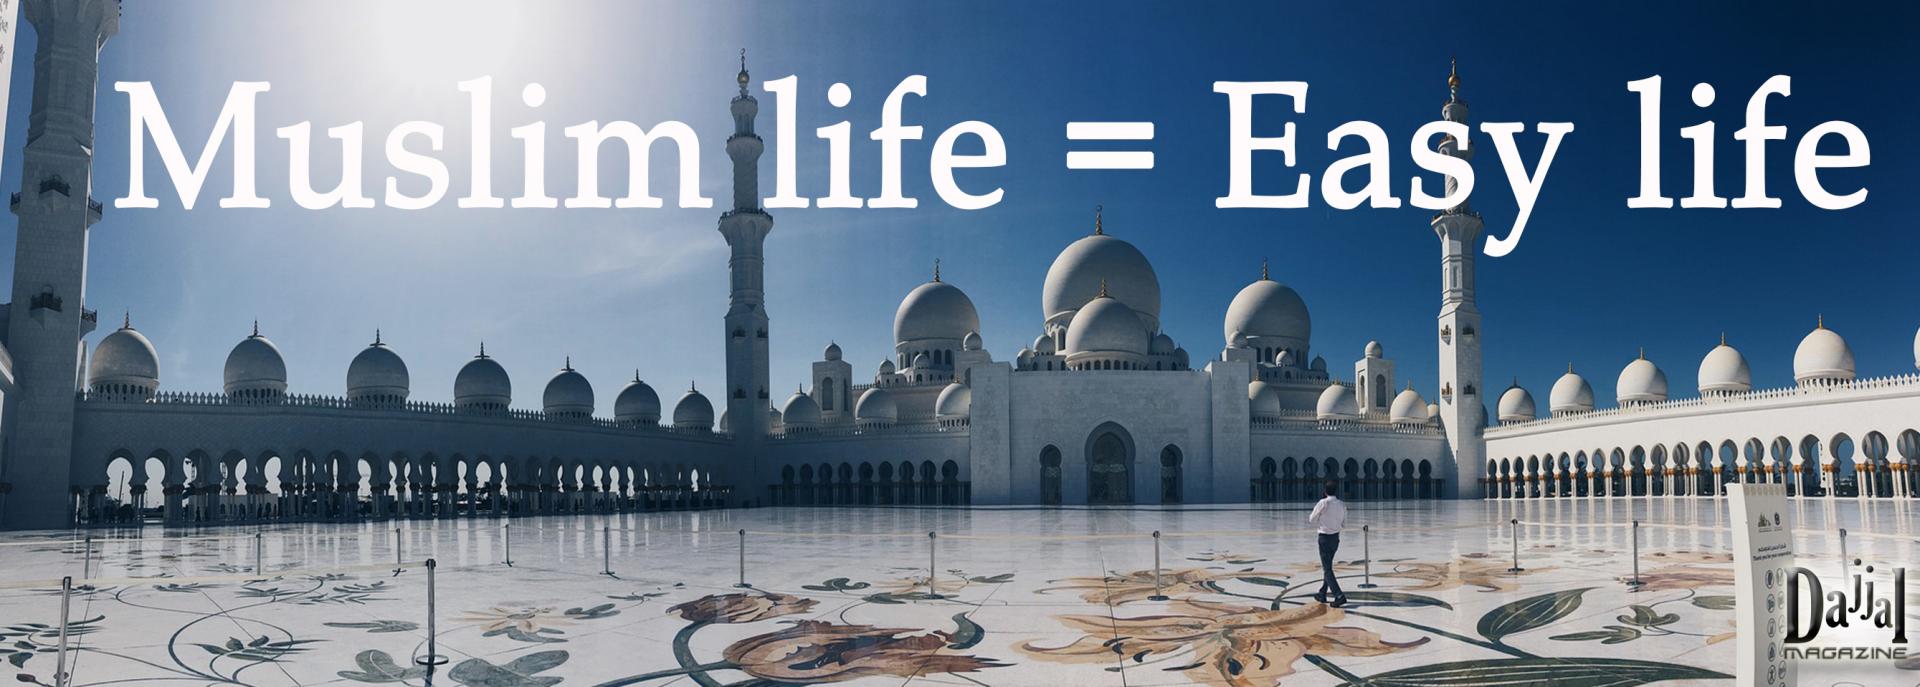 Muslim life easy life